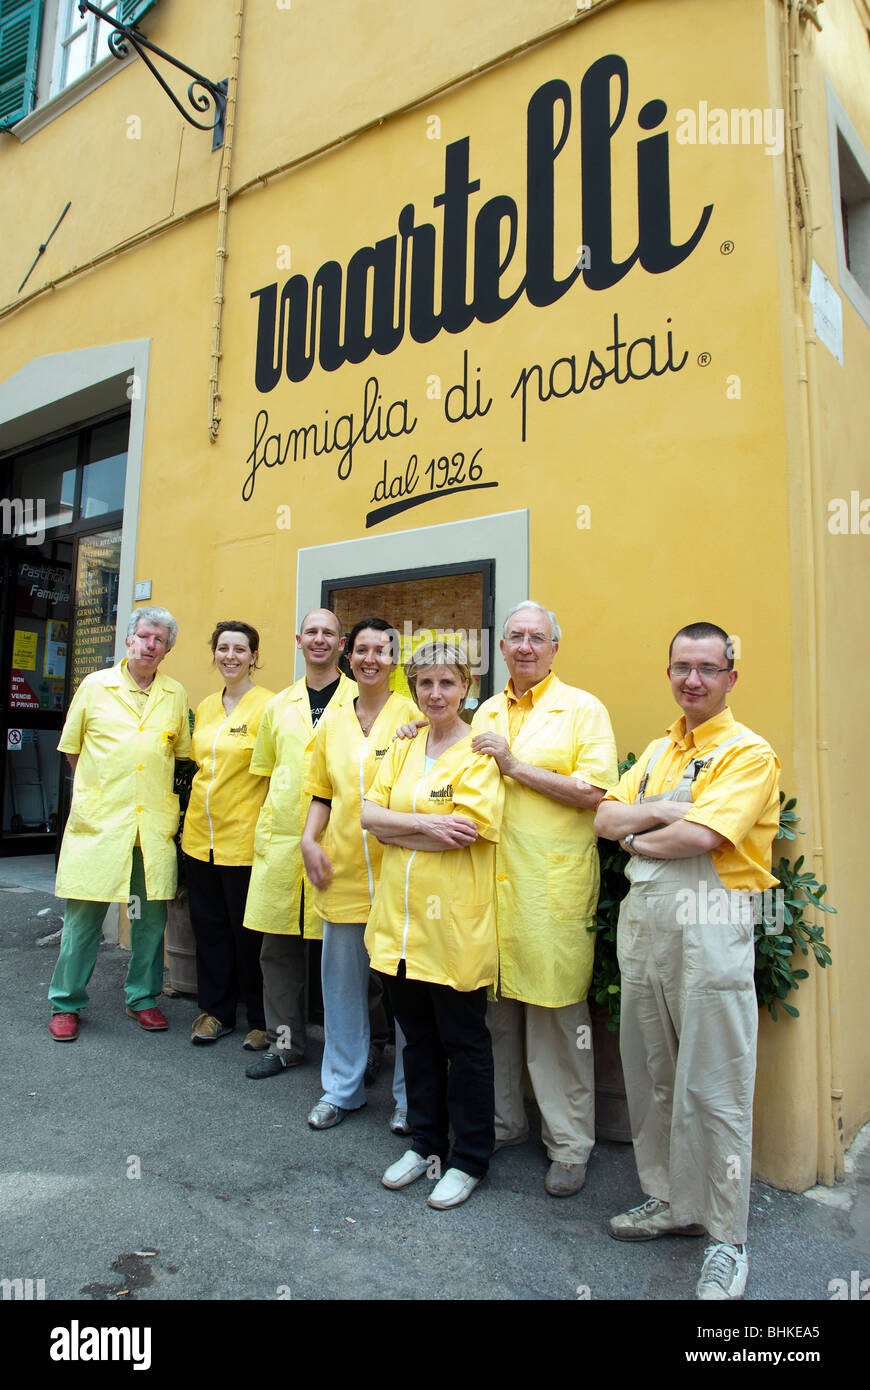 Family owned and run pasta factory in Lari, Italy: Martelli Famiglia di pastai Stock Photo